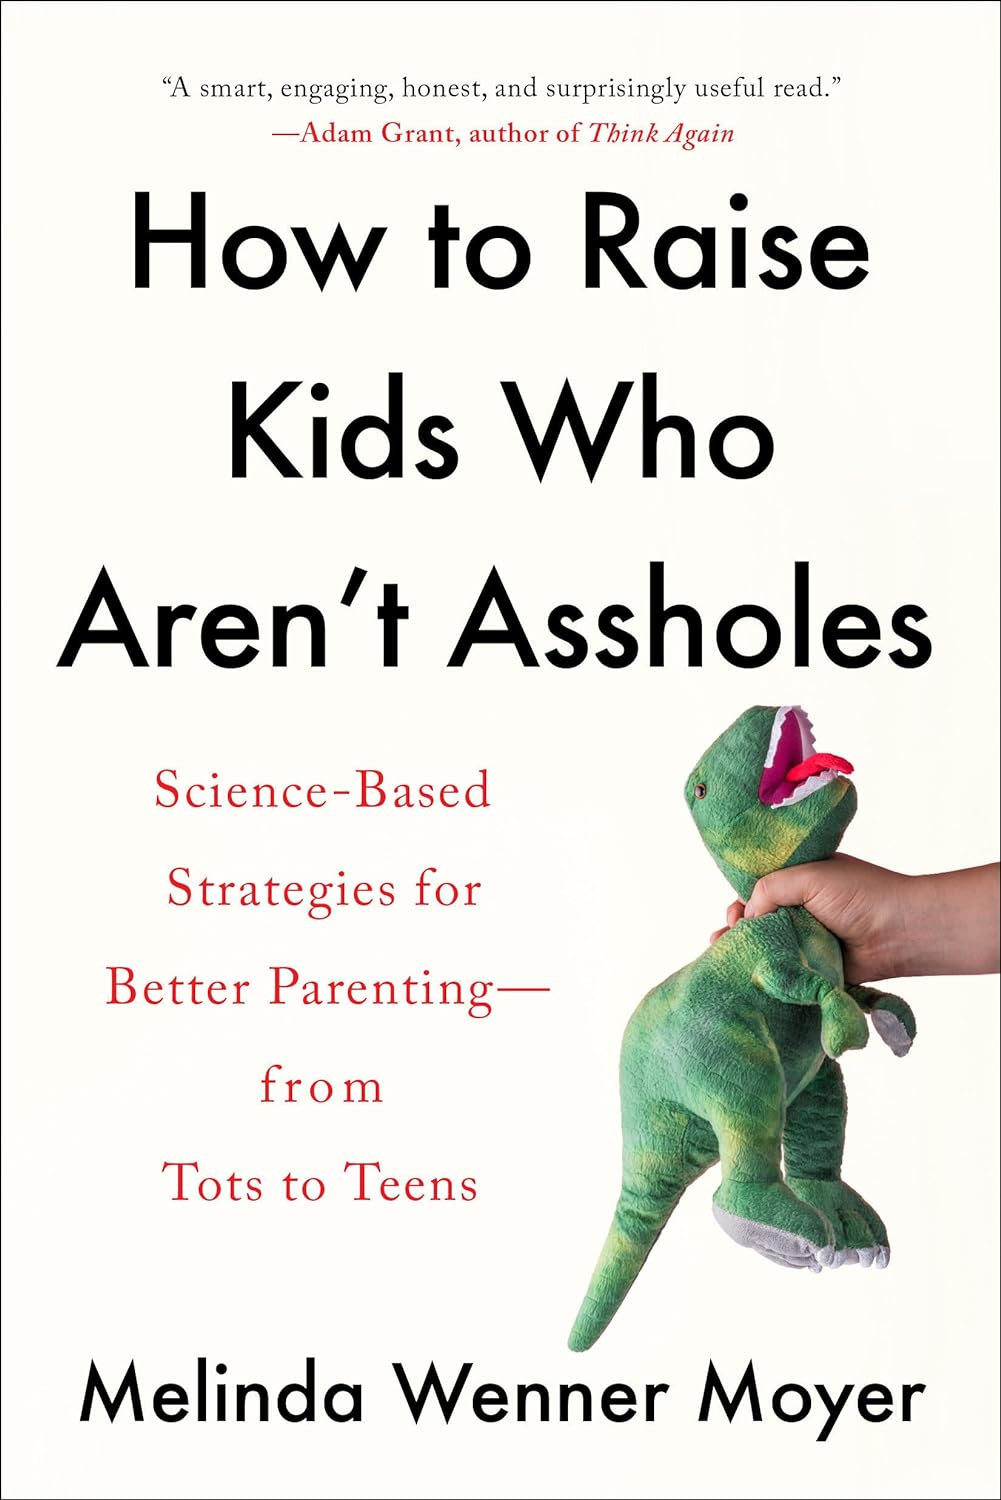 How to Raise Kids Who Aren't Jerks by Melinda Wenner Moyer